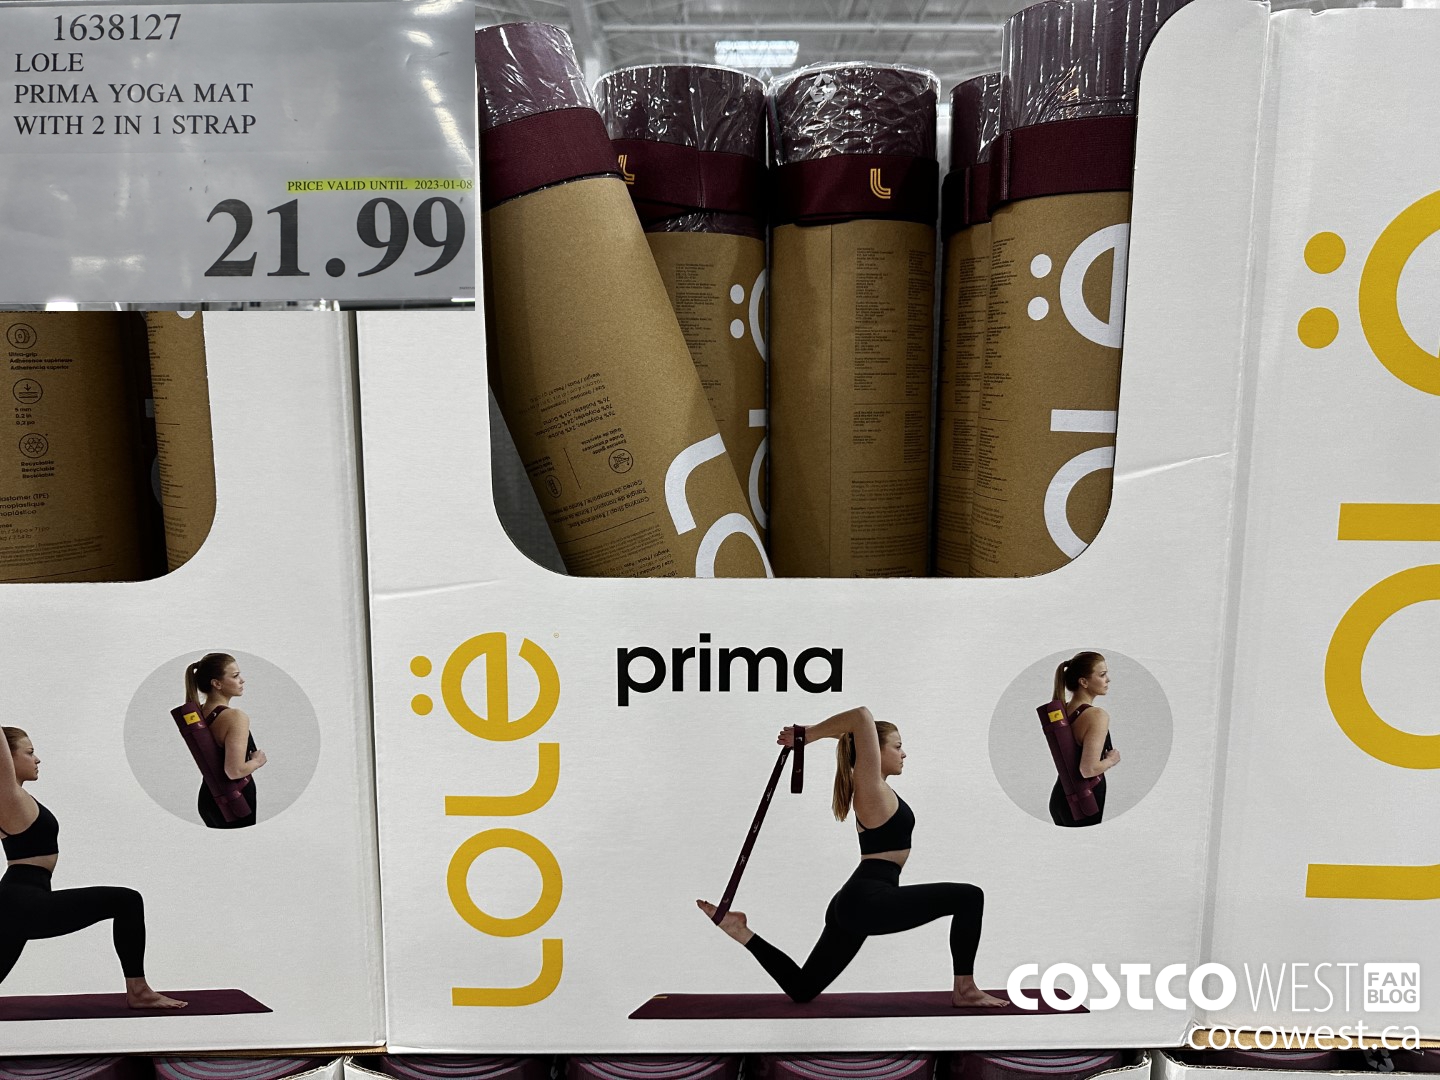 Costco Yoga Mat, Lolë Prima Yoga Mat w/ Strap